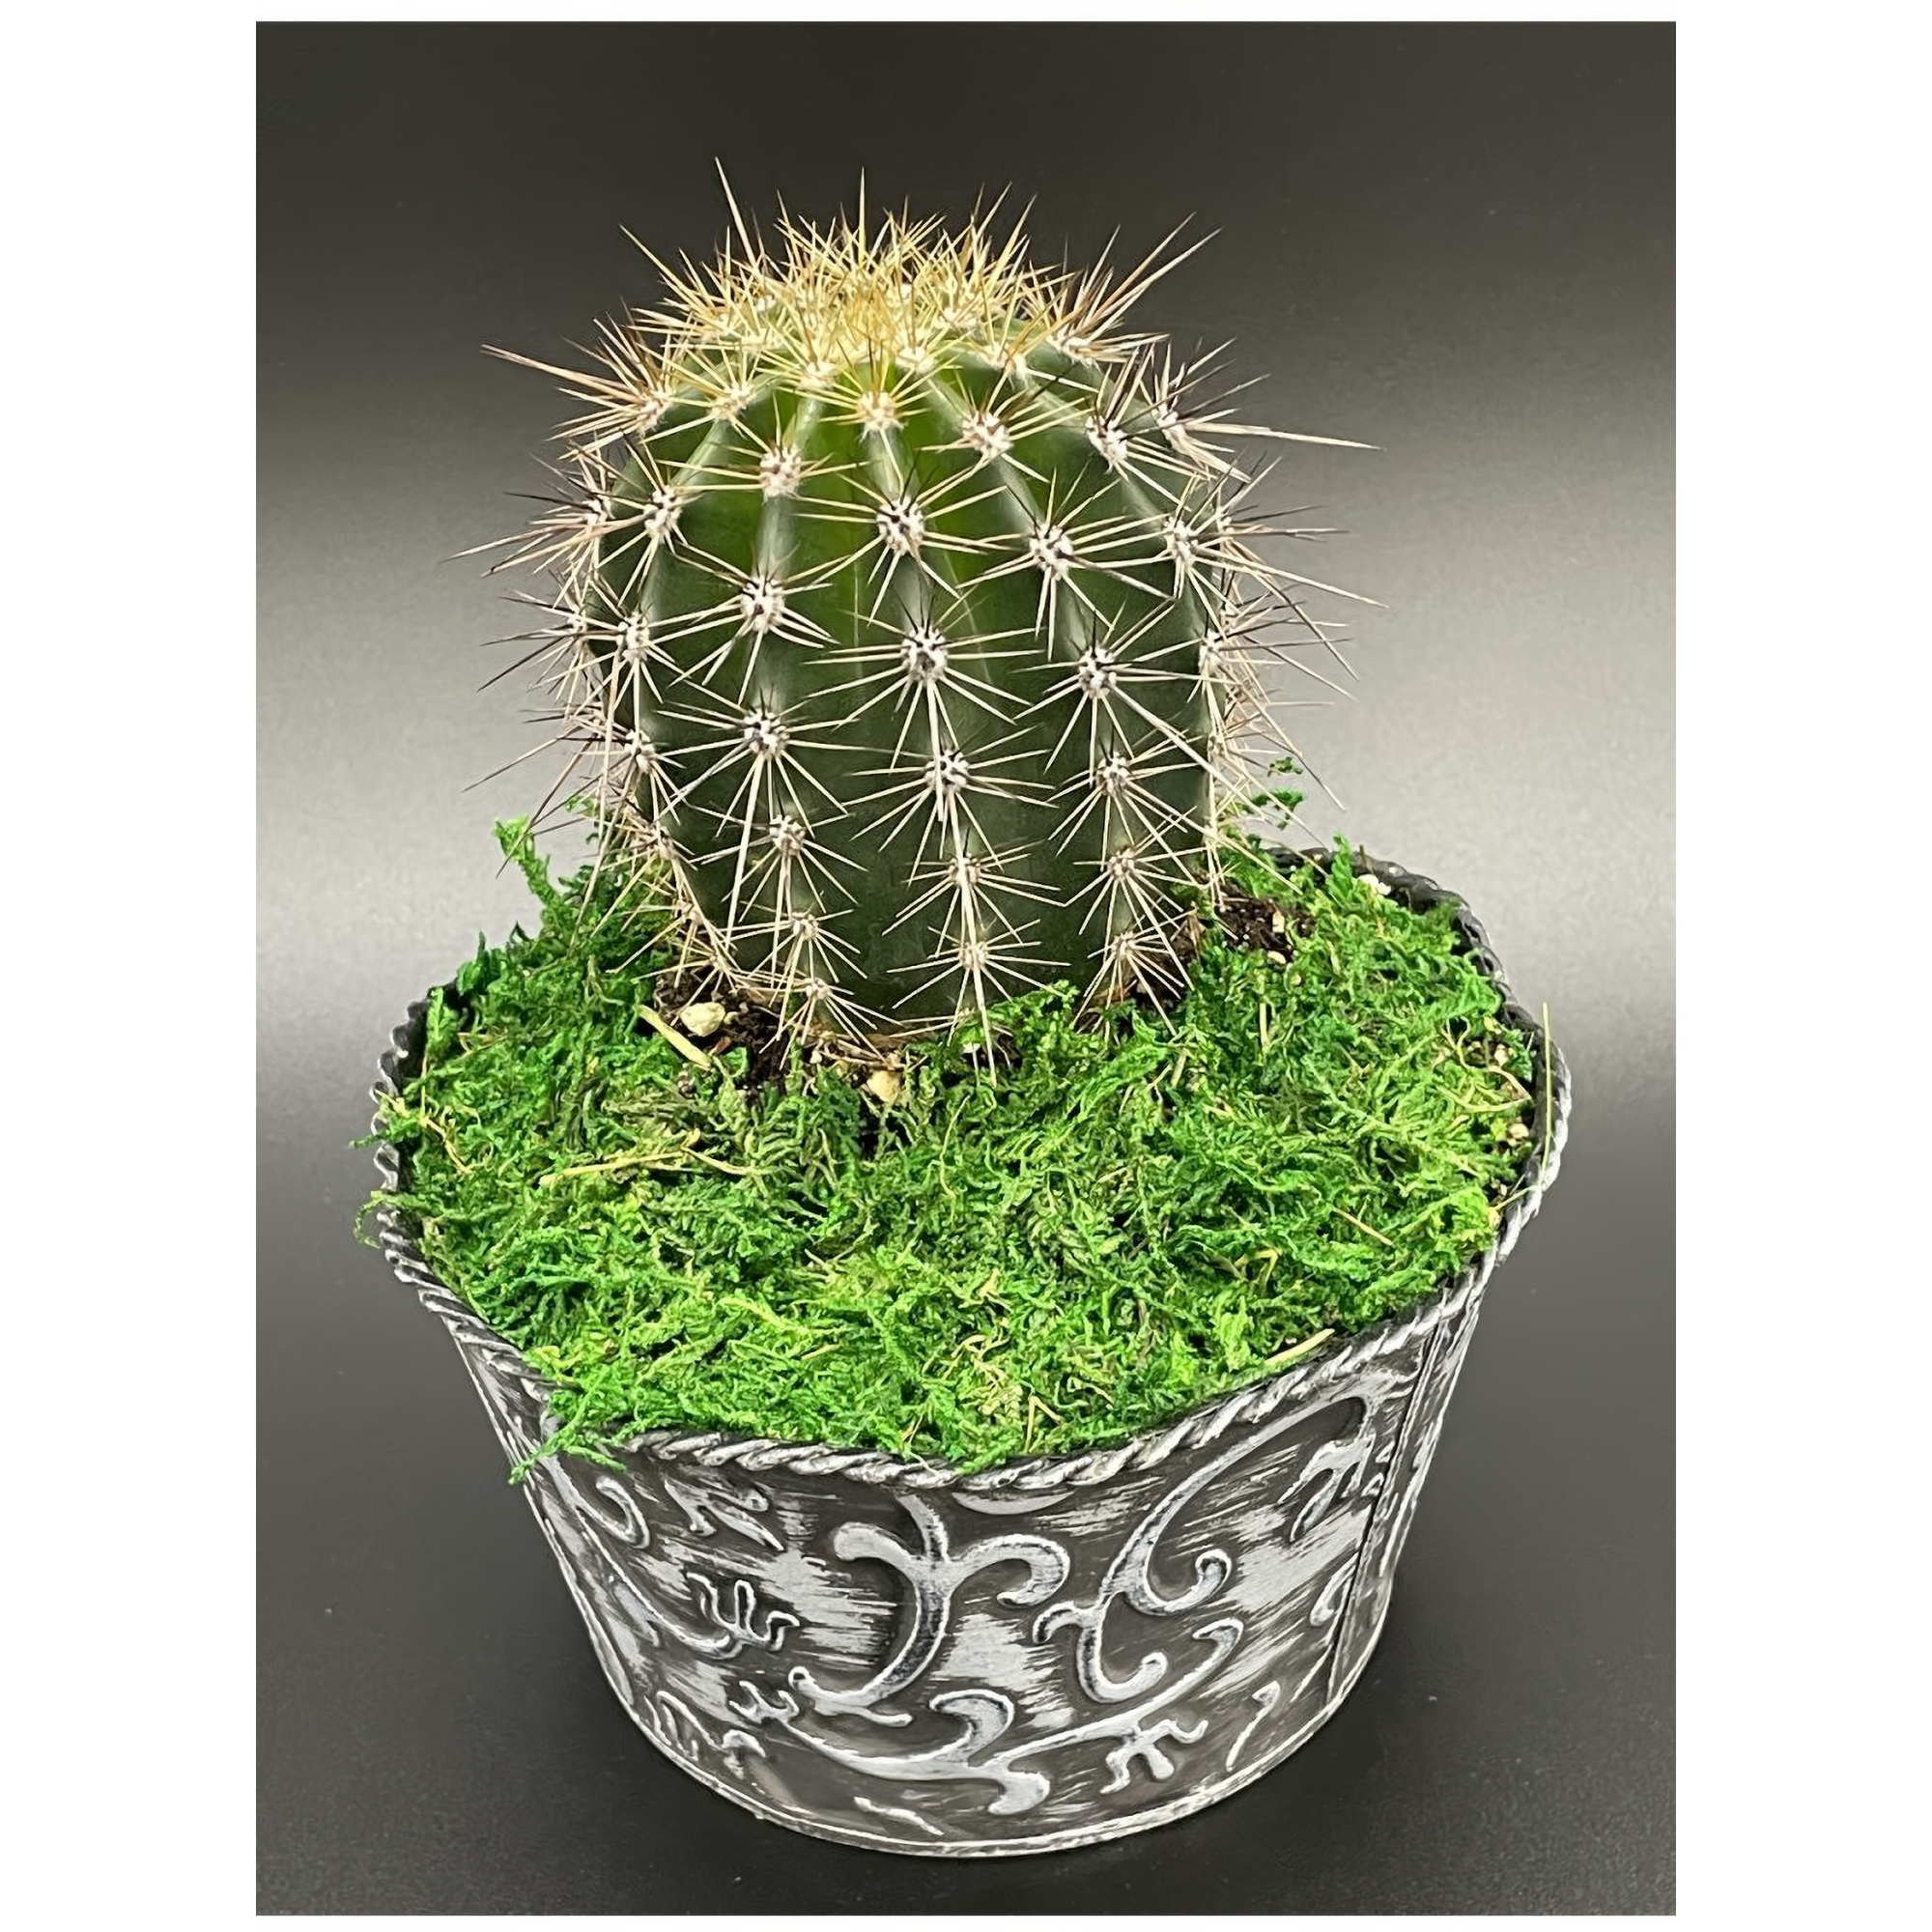 6" Round Golden Barrel Cactus - Plants